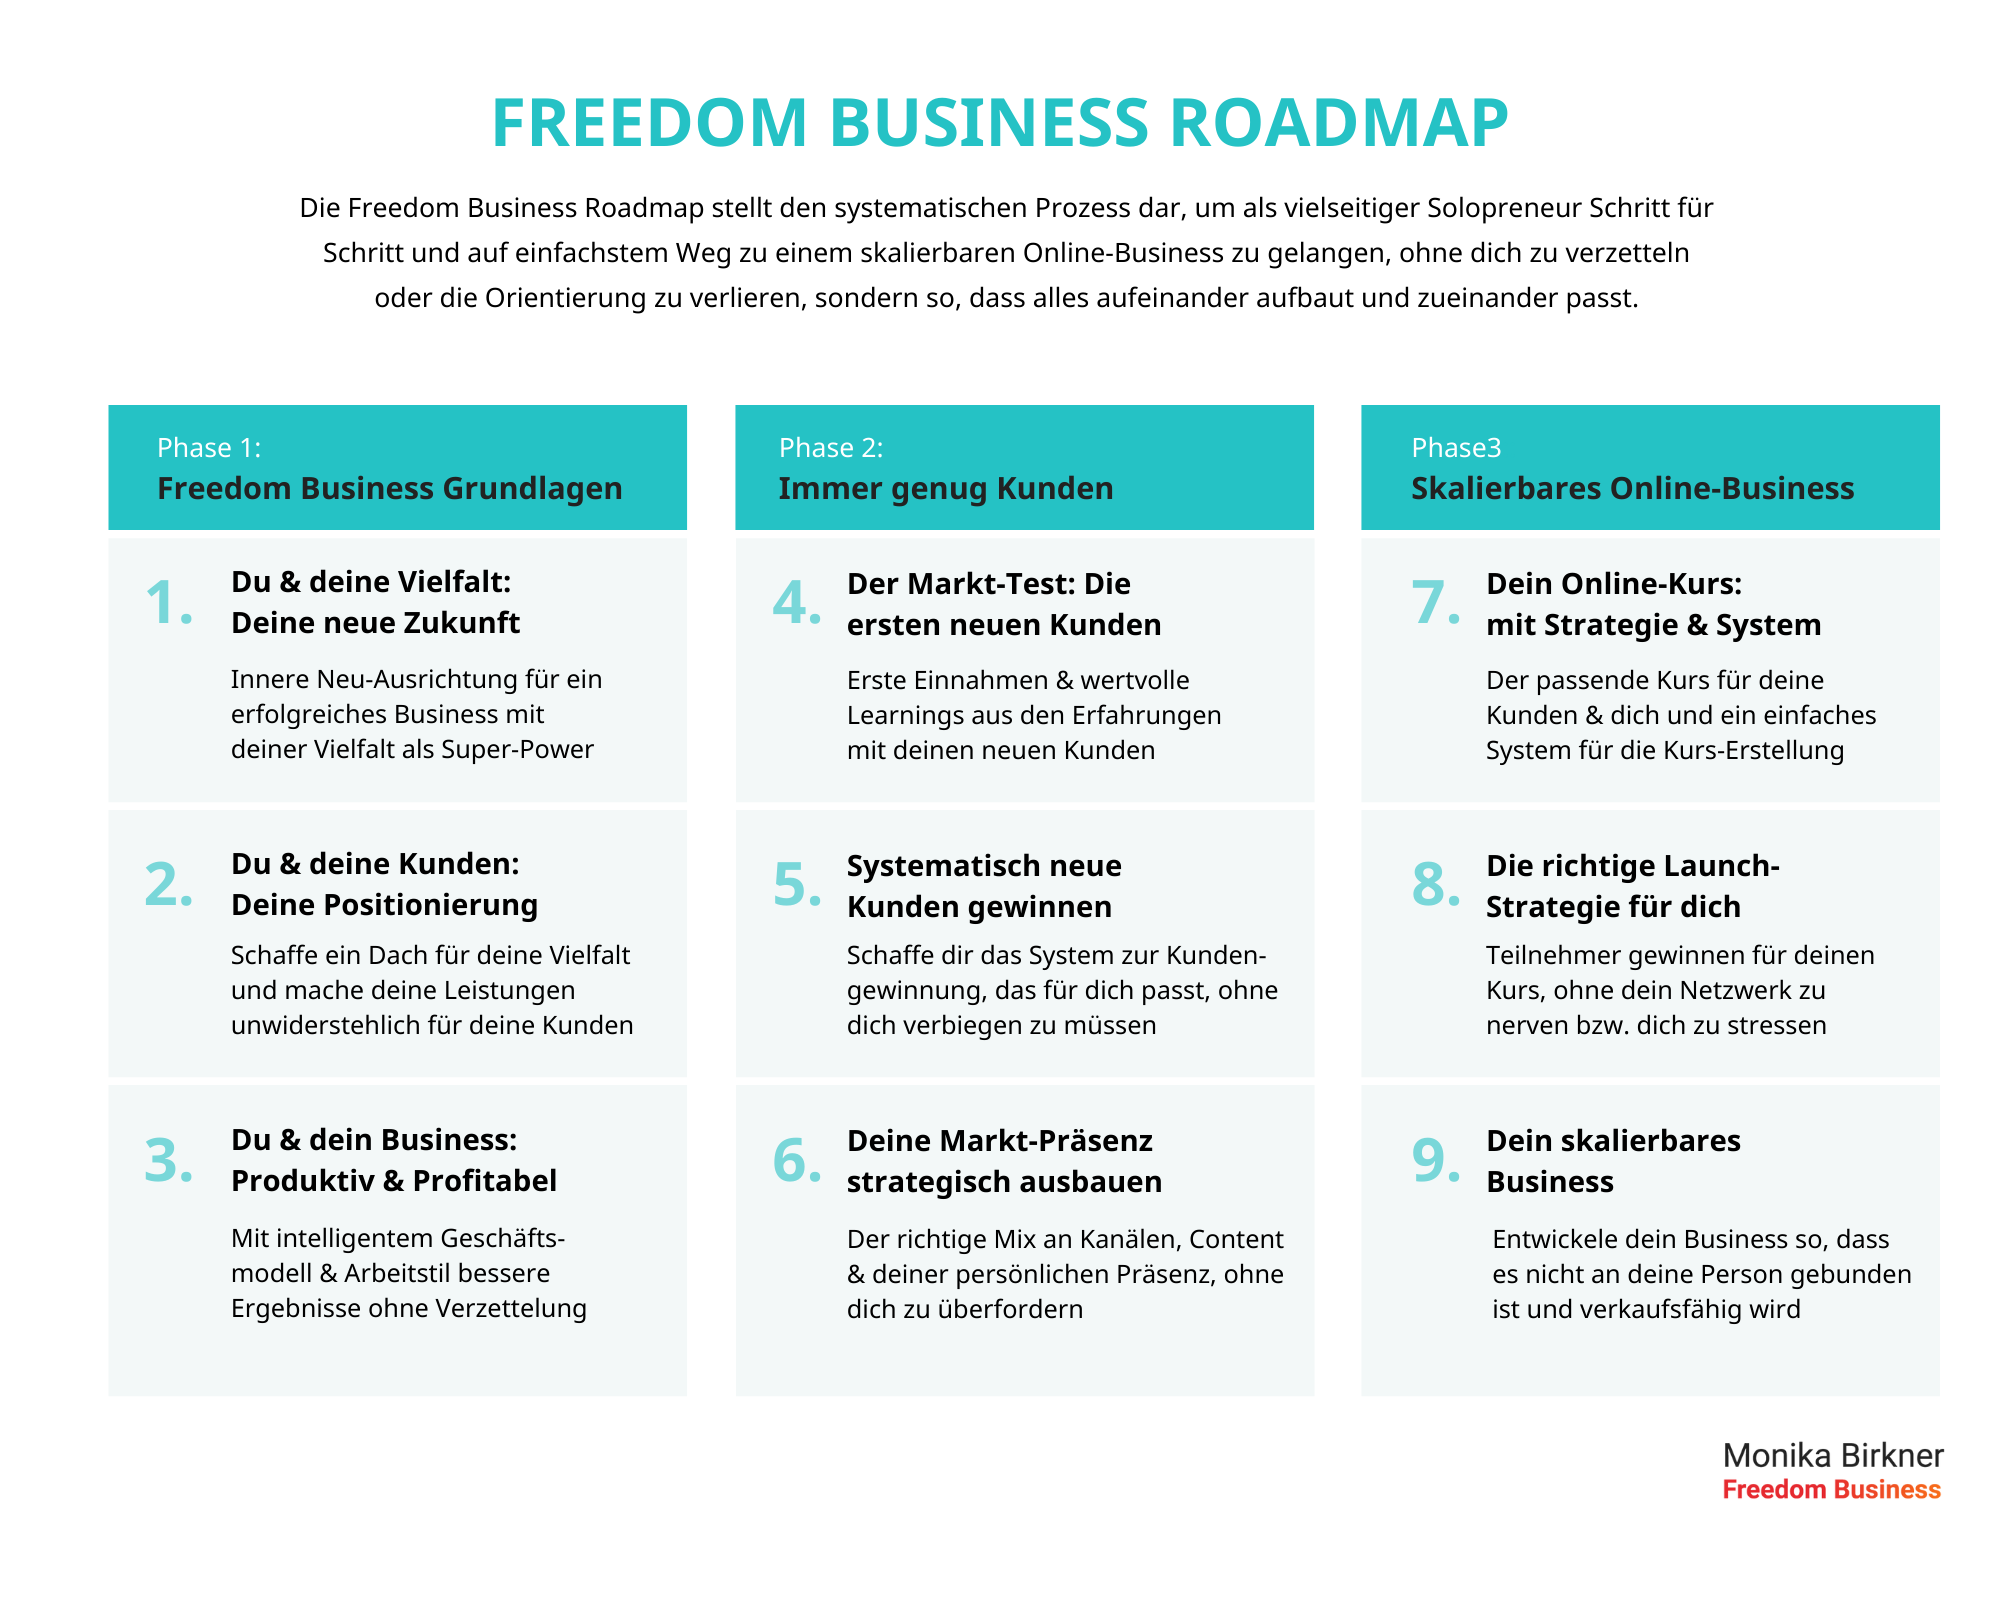 Monika BirknerFreedom Business Roadmap 2022